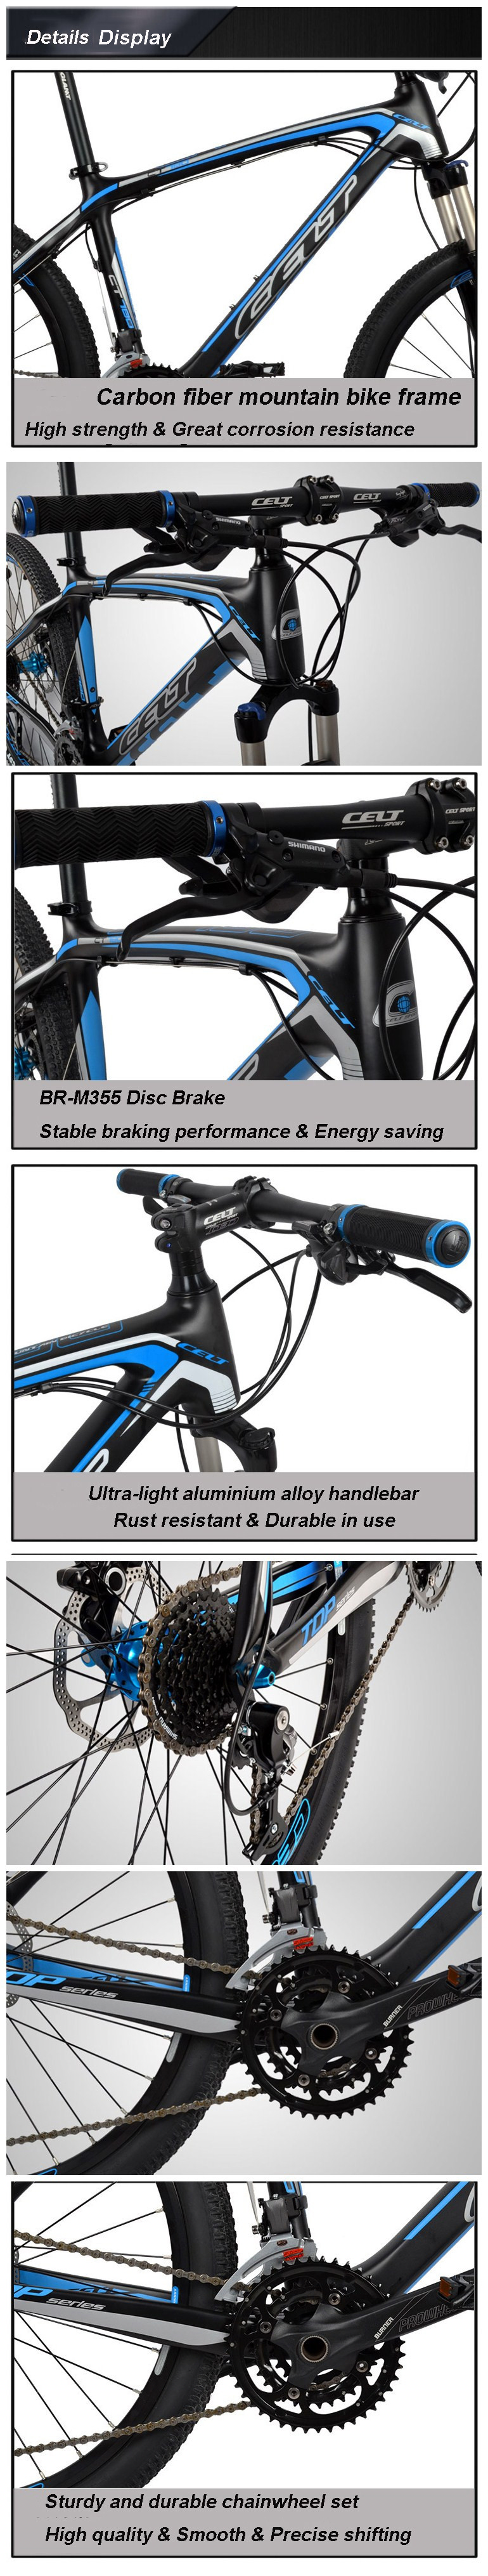 26-Inch-Mountain-Bike-Bicycle-Carbon-Fiber-Frame-Bike-27-Speed-Light-Weight-Bicycle-1014478